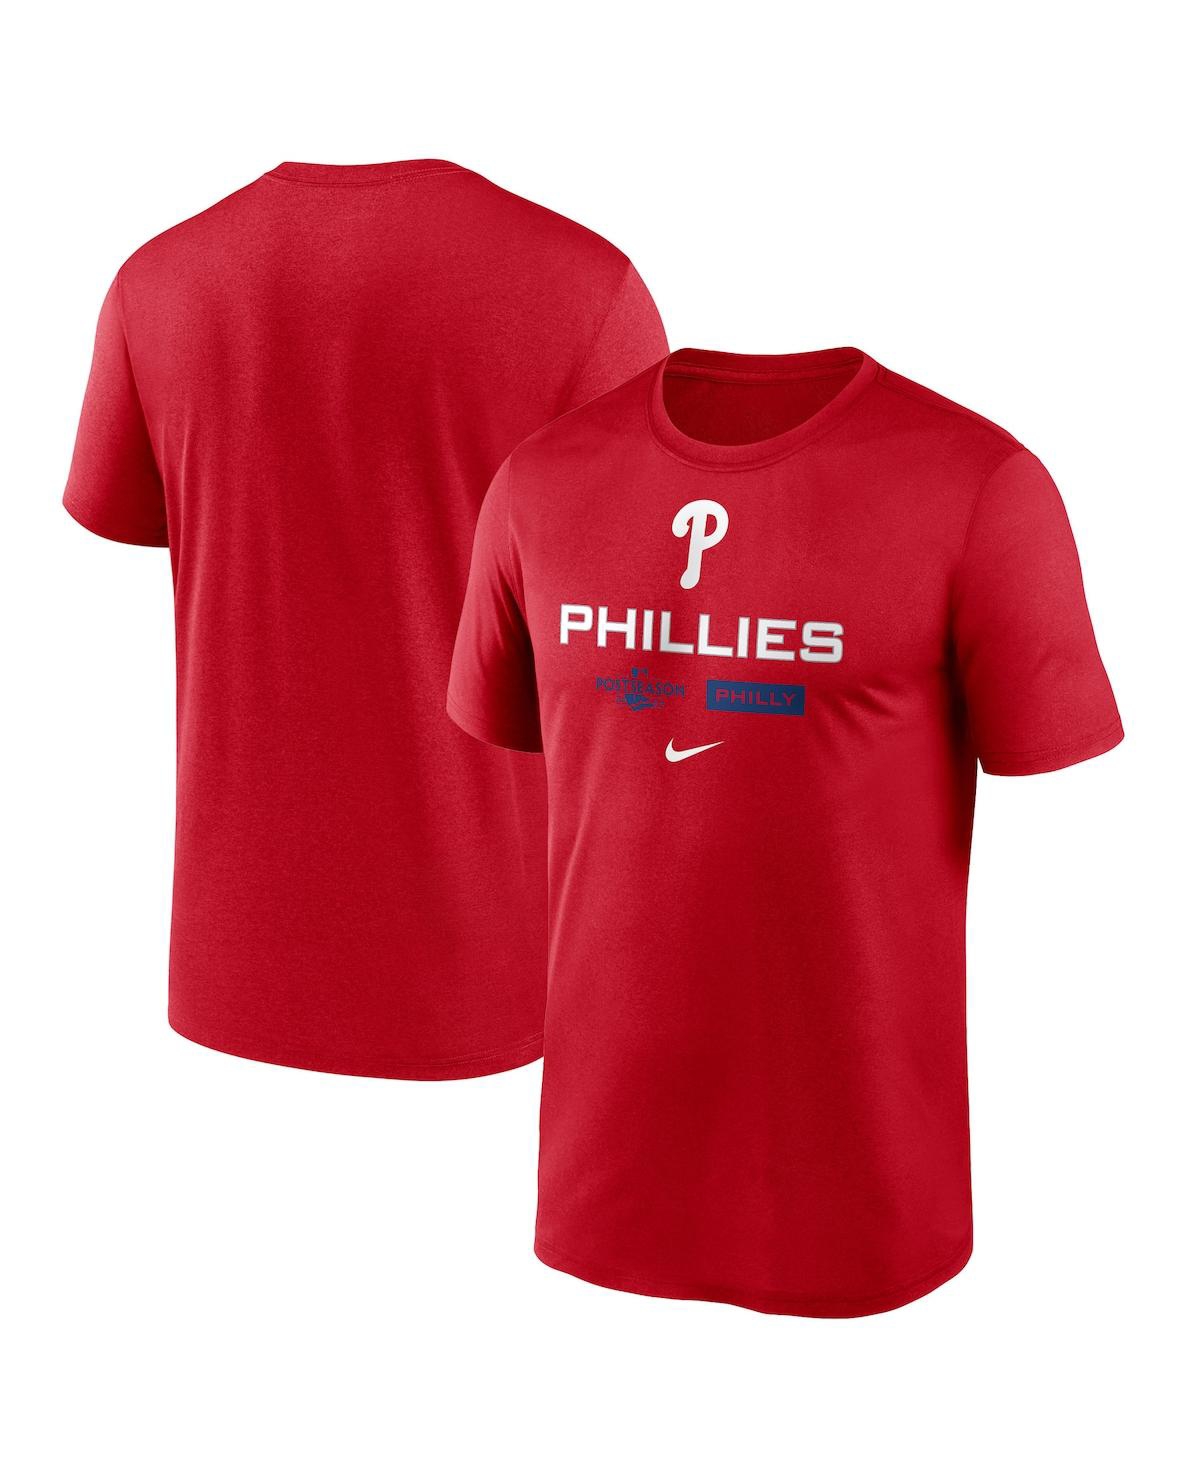 Men's Nike Red Philadelphia Phillies 2022 Postseason Authentic Collection Dugout T-shirt